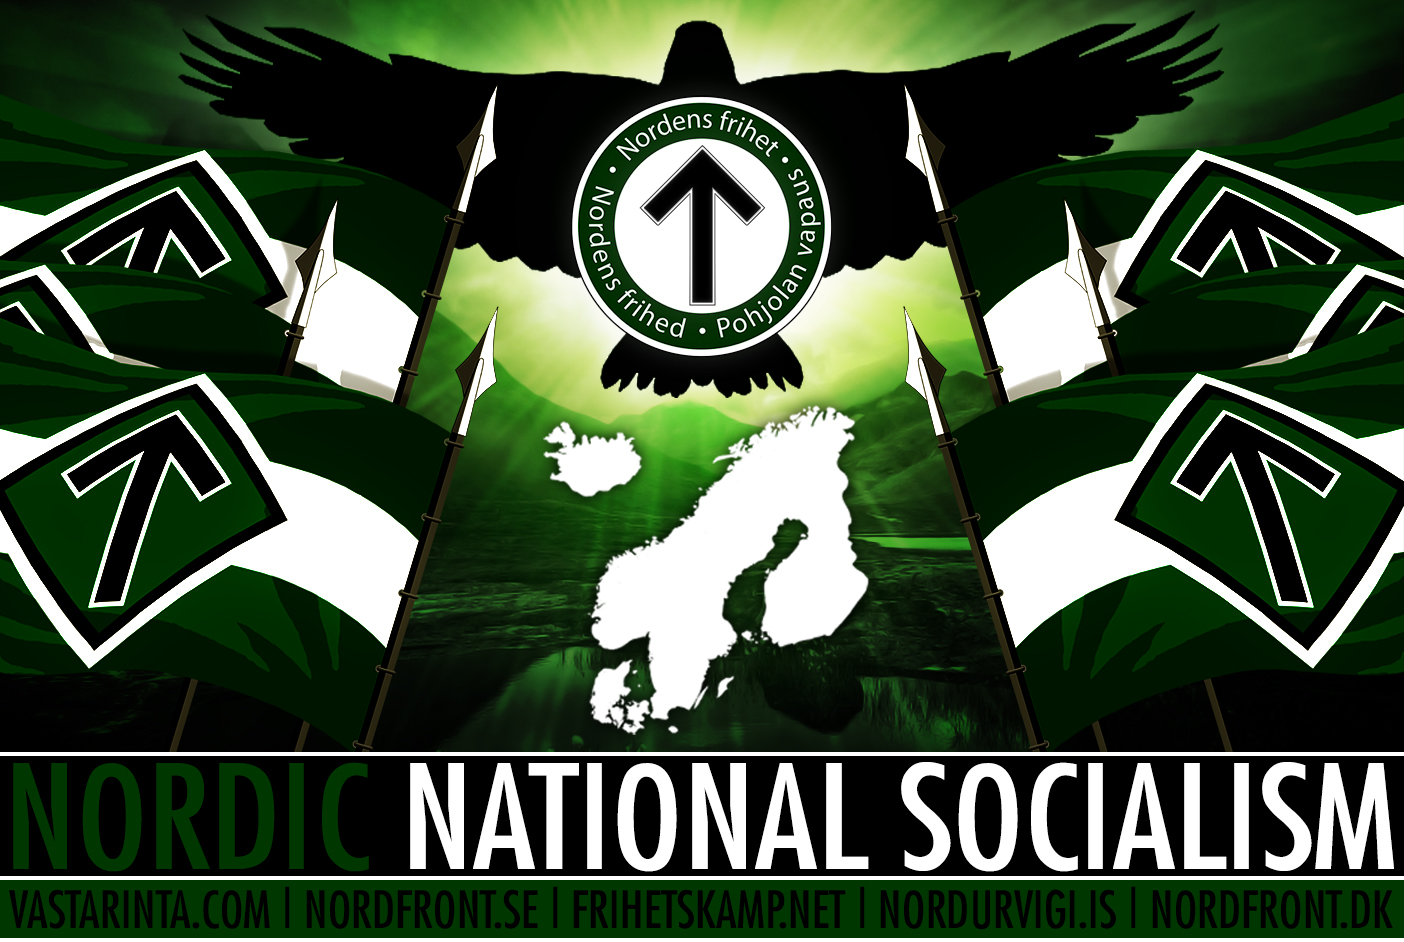 PB_Nordic_National_Socialism.jpg